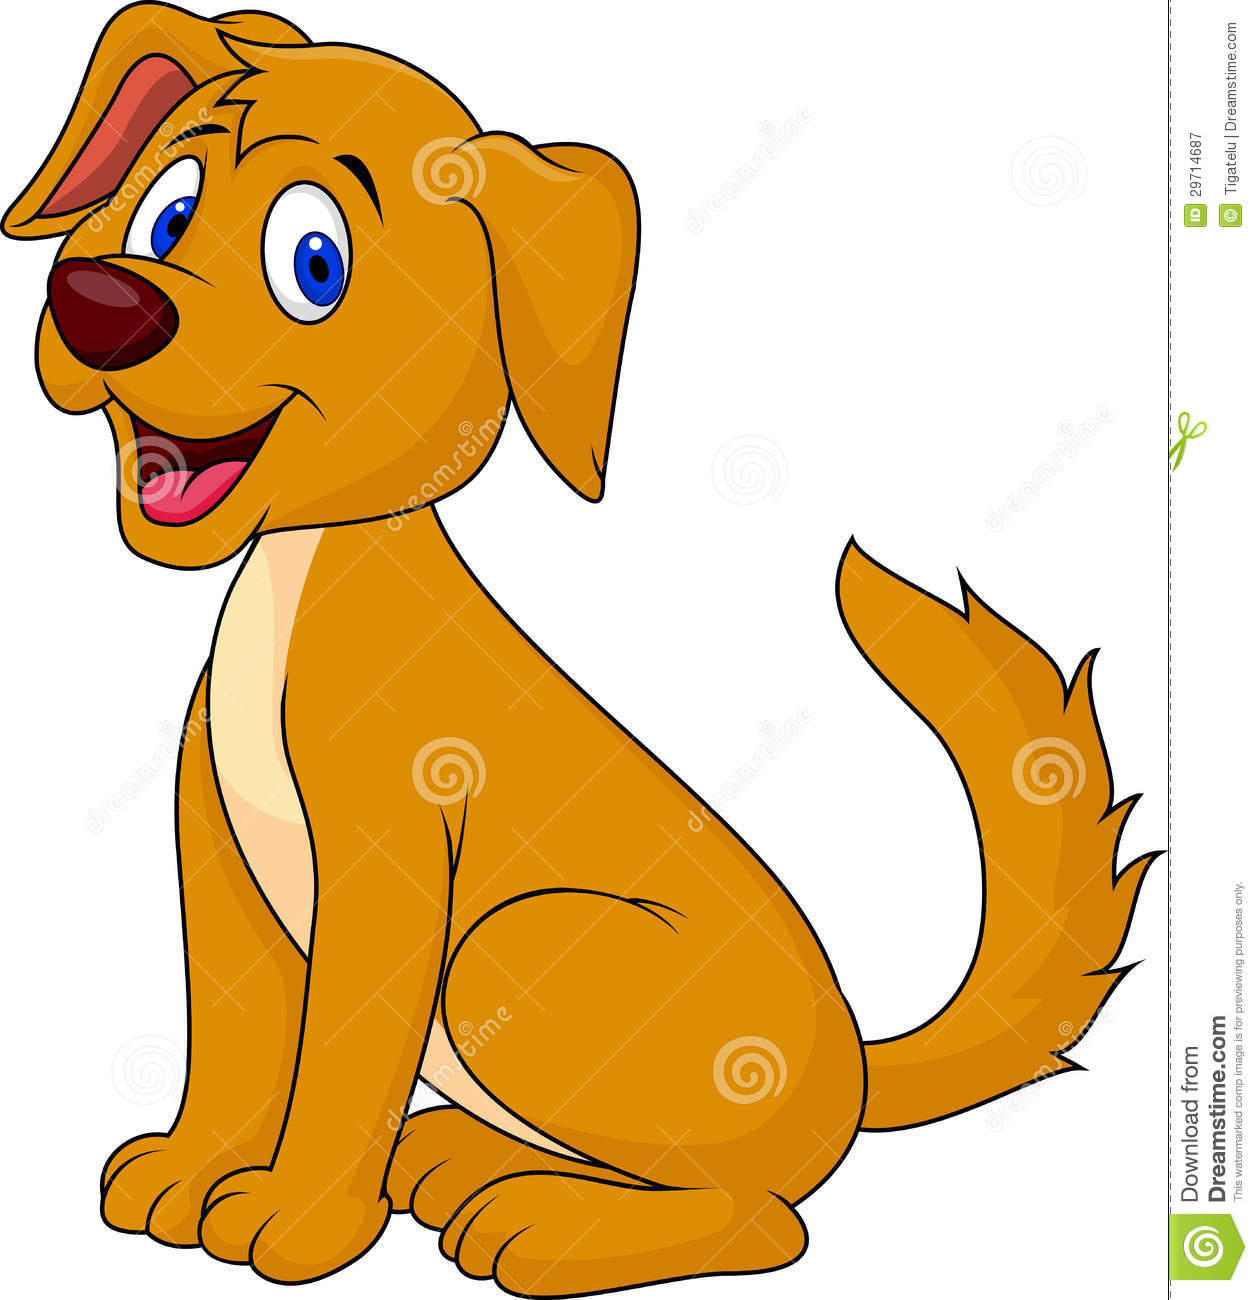 Cute Dog Cartoon Sitting Royalty Free Stock Photography   Image    